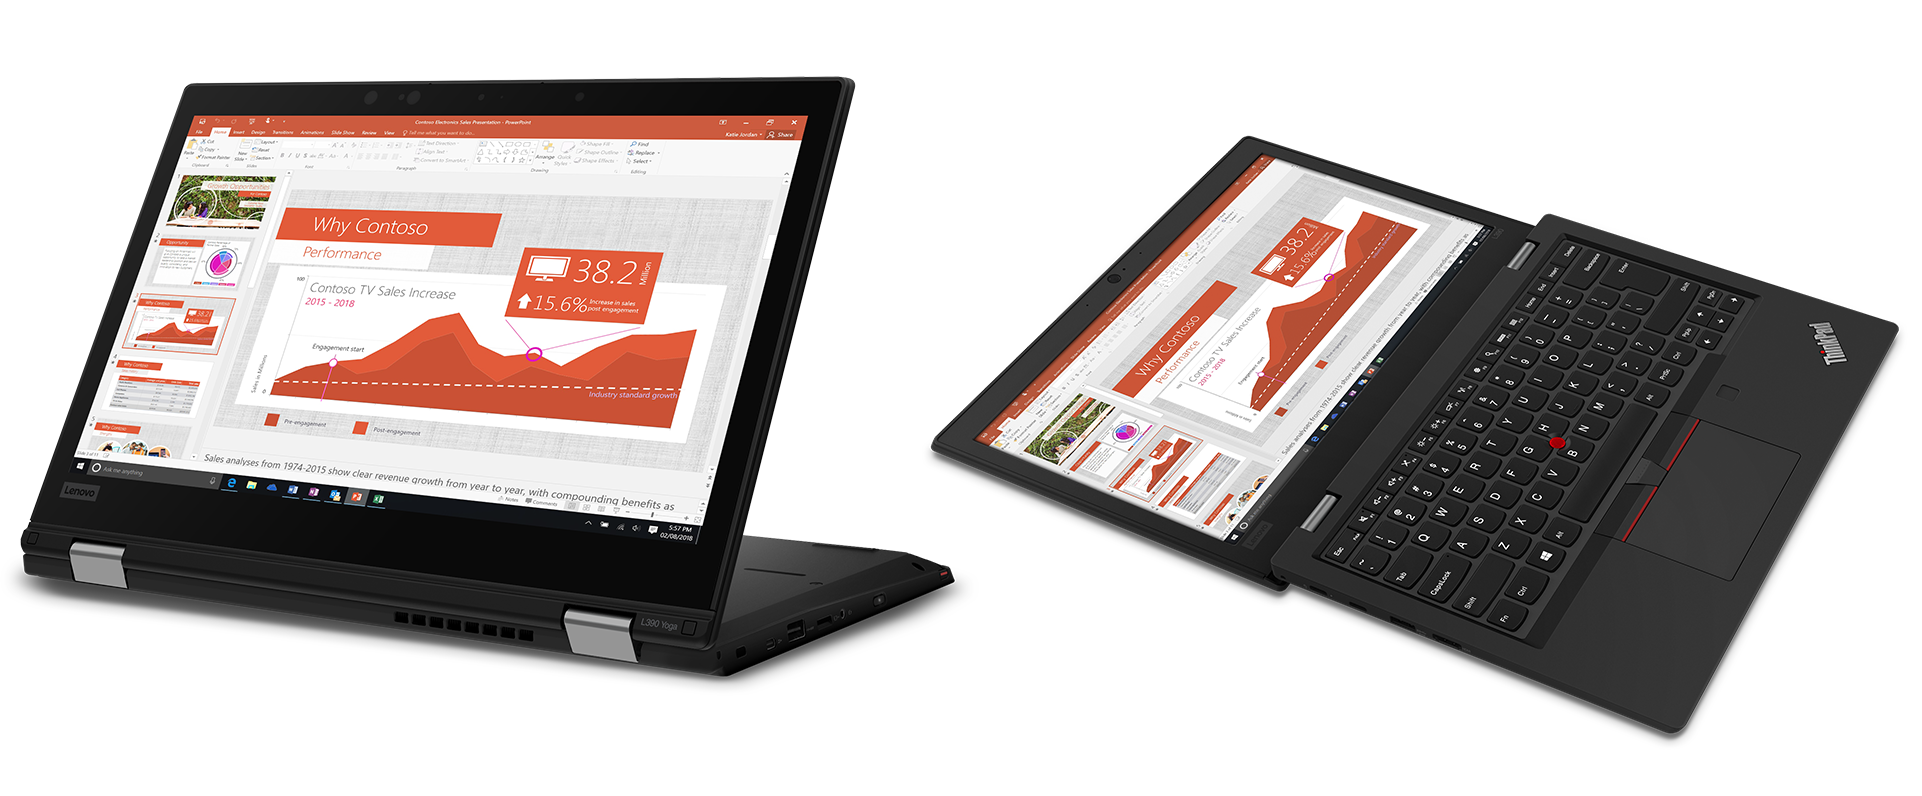 Keyboard freezes every startup, Lenovo Thinkpad Yoga w/Windows 10 Lenovo-side-by-side.png